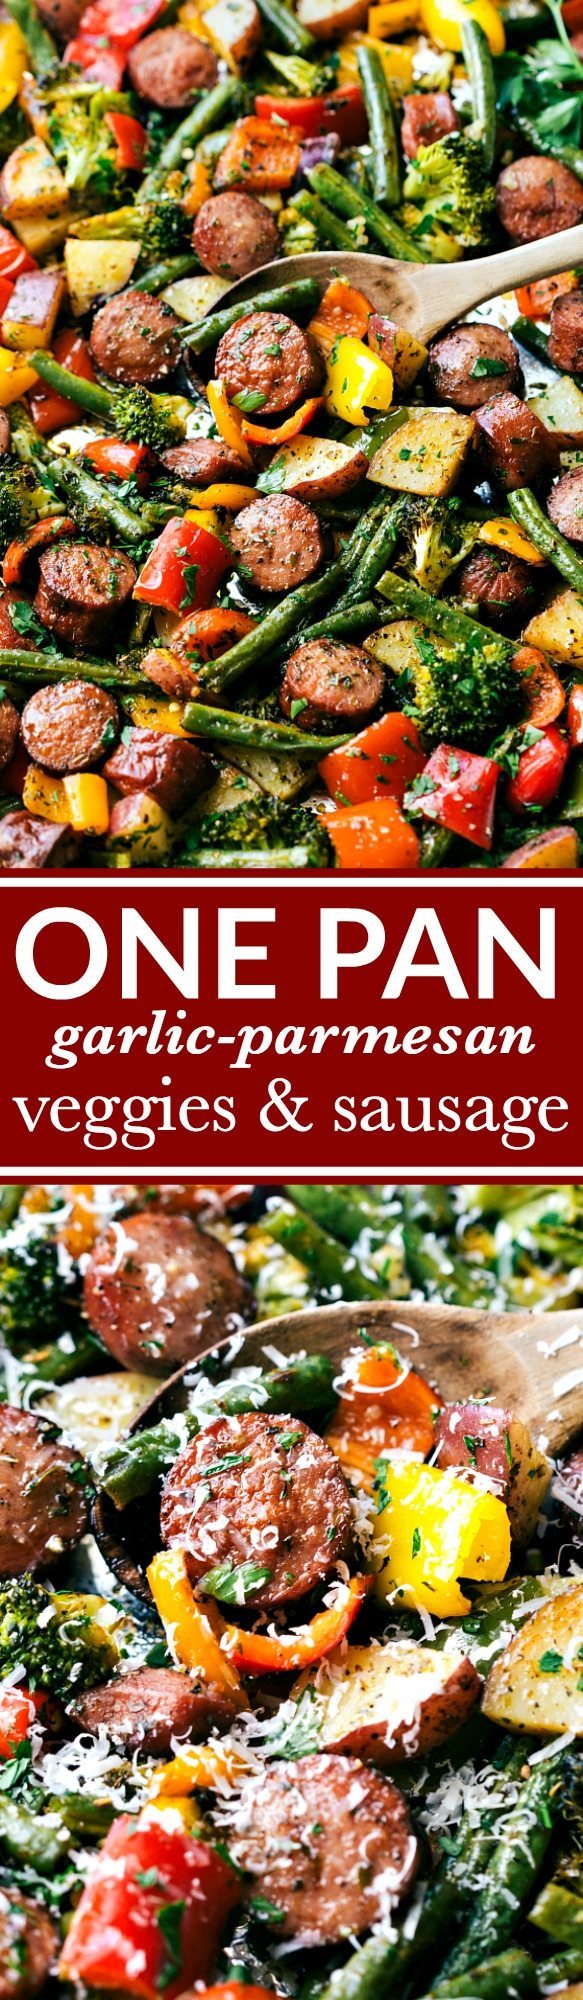 Sheet Pan Sausage and Veggies - Chelsea's Messy Apron